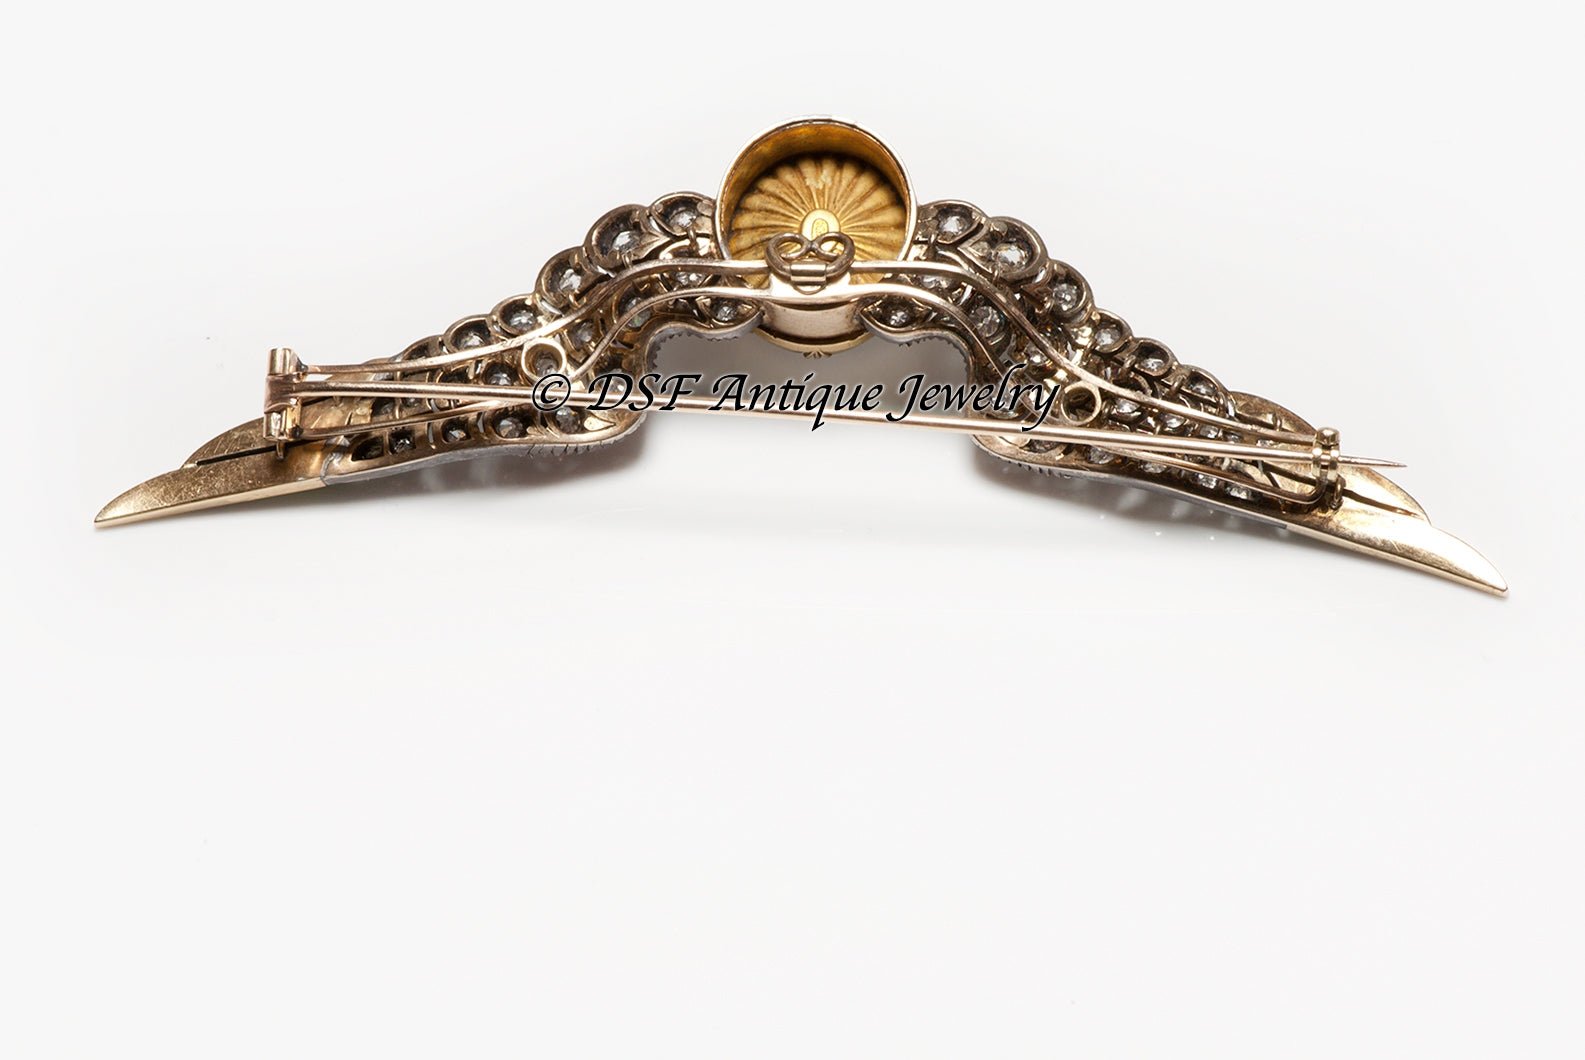 Antique Carlo Giuliano Diamond Moonstone Enamel Wings Brooch - DSF Antique Jewelry